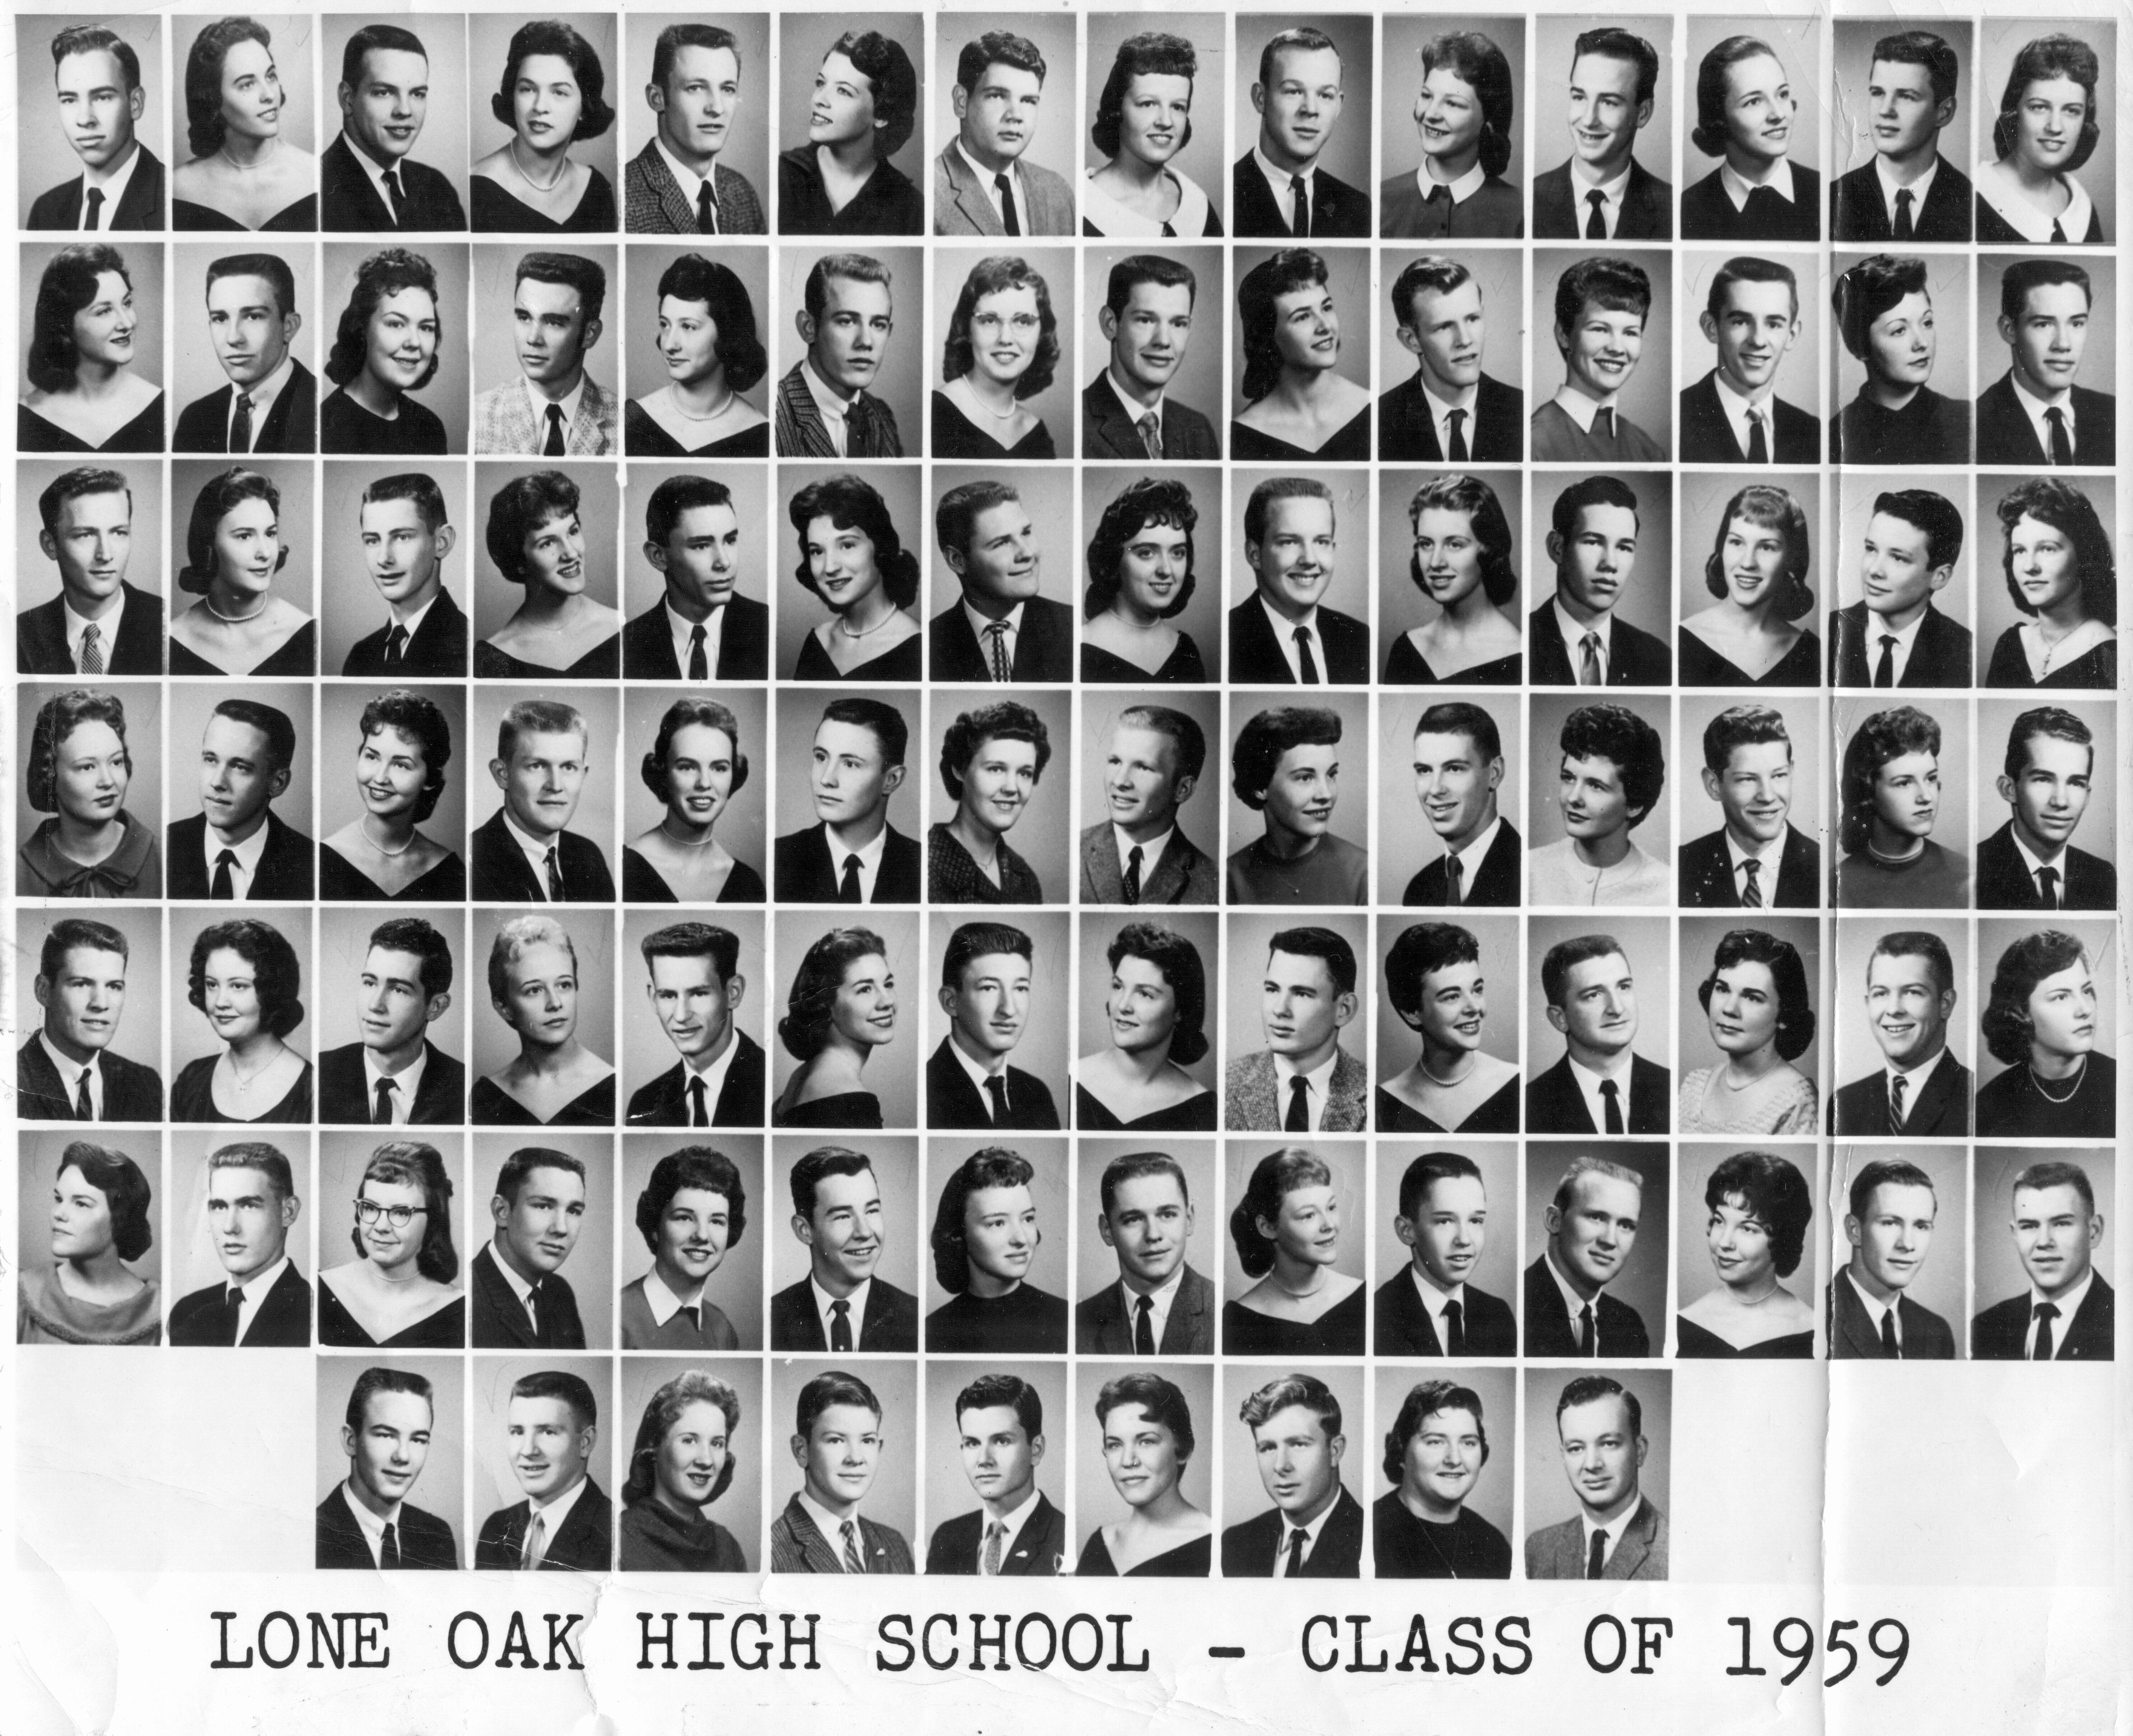 Class of 1931